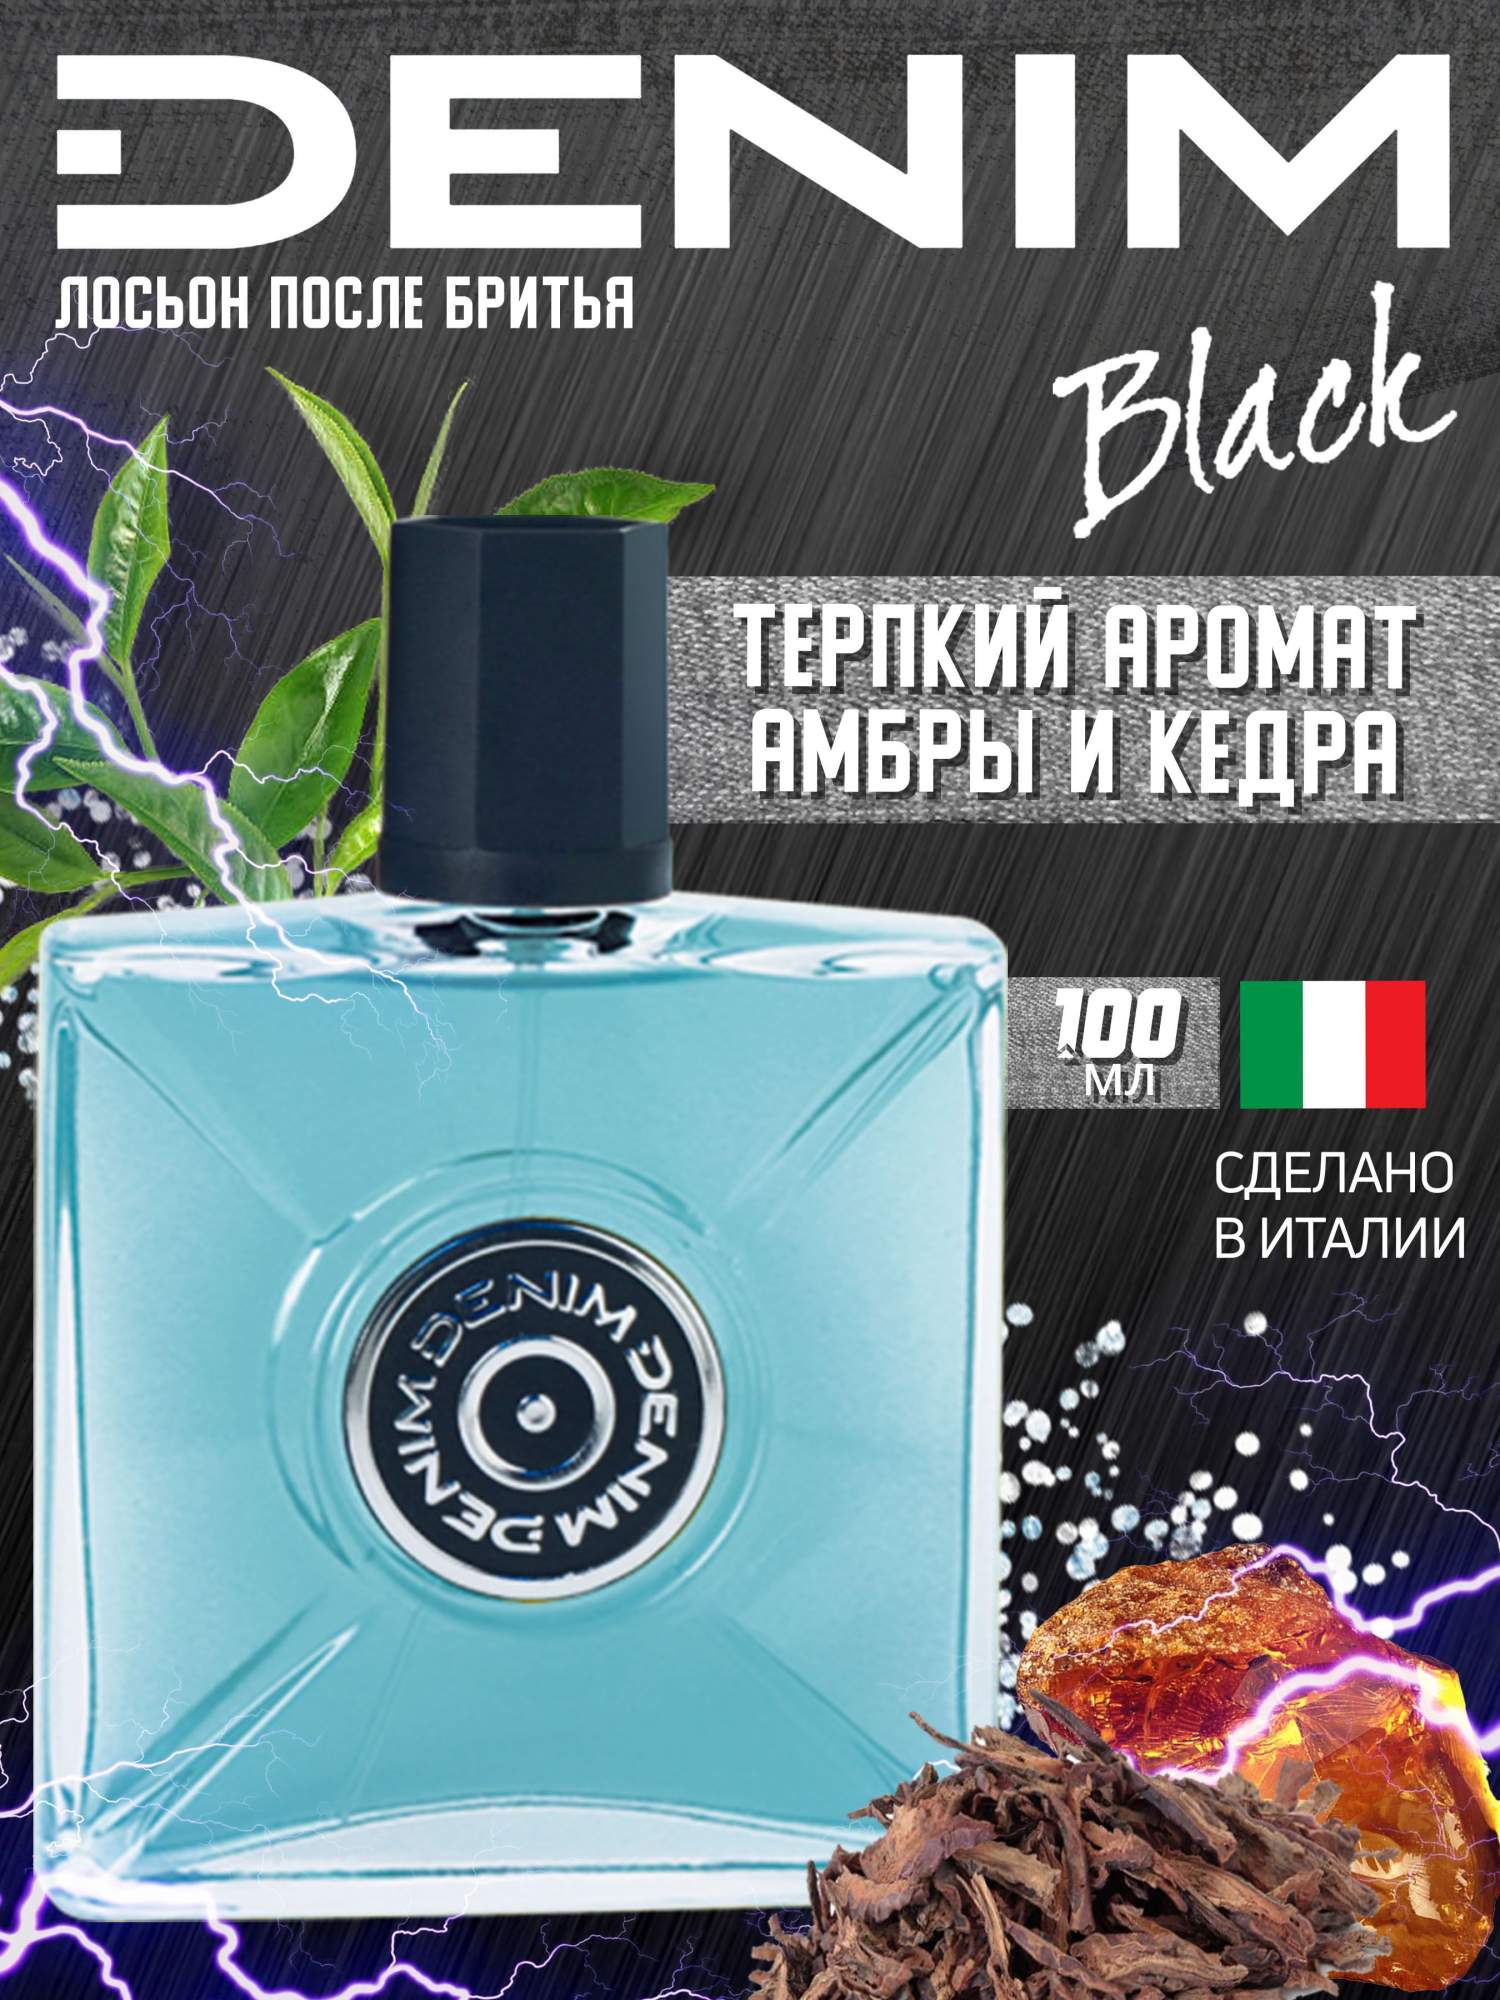 Buy DENIM Black Eau de Cologne - 100 ml Online In India | Flipkart.com